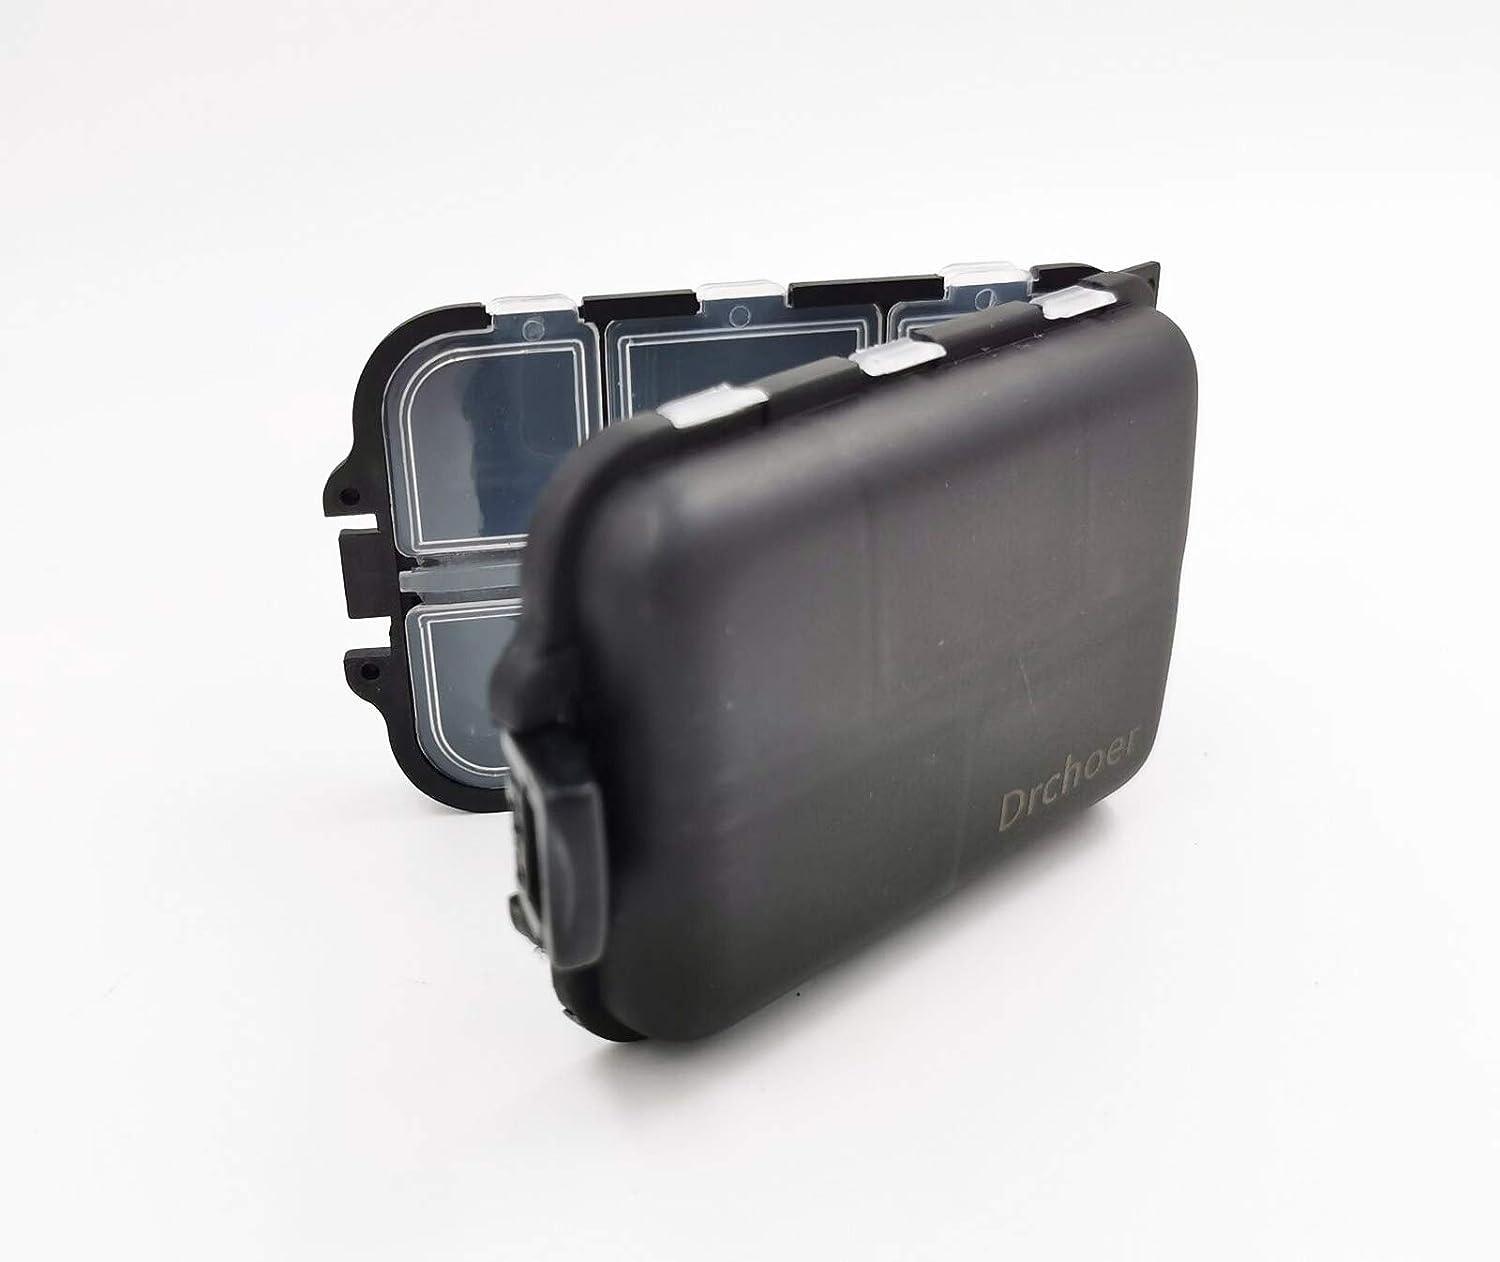  Portable ABS plastic material Lure Bait Storage Case